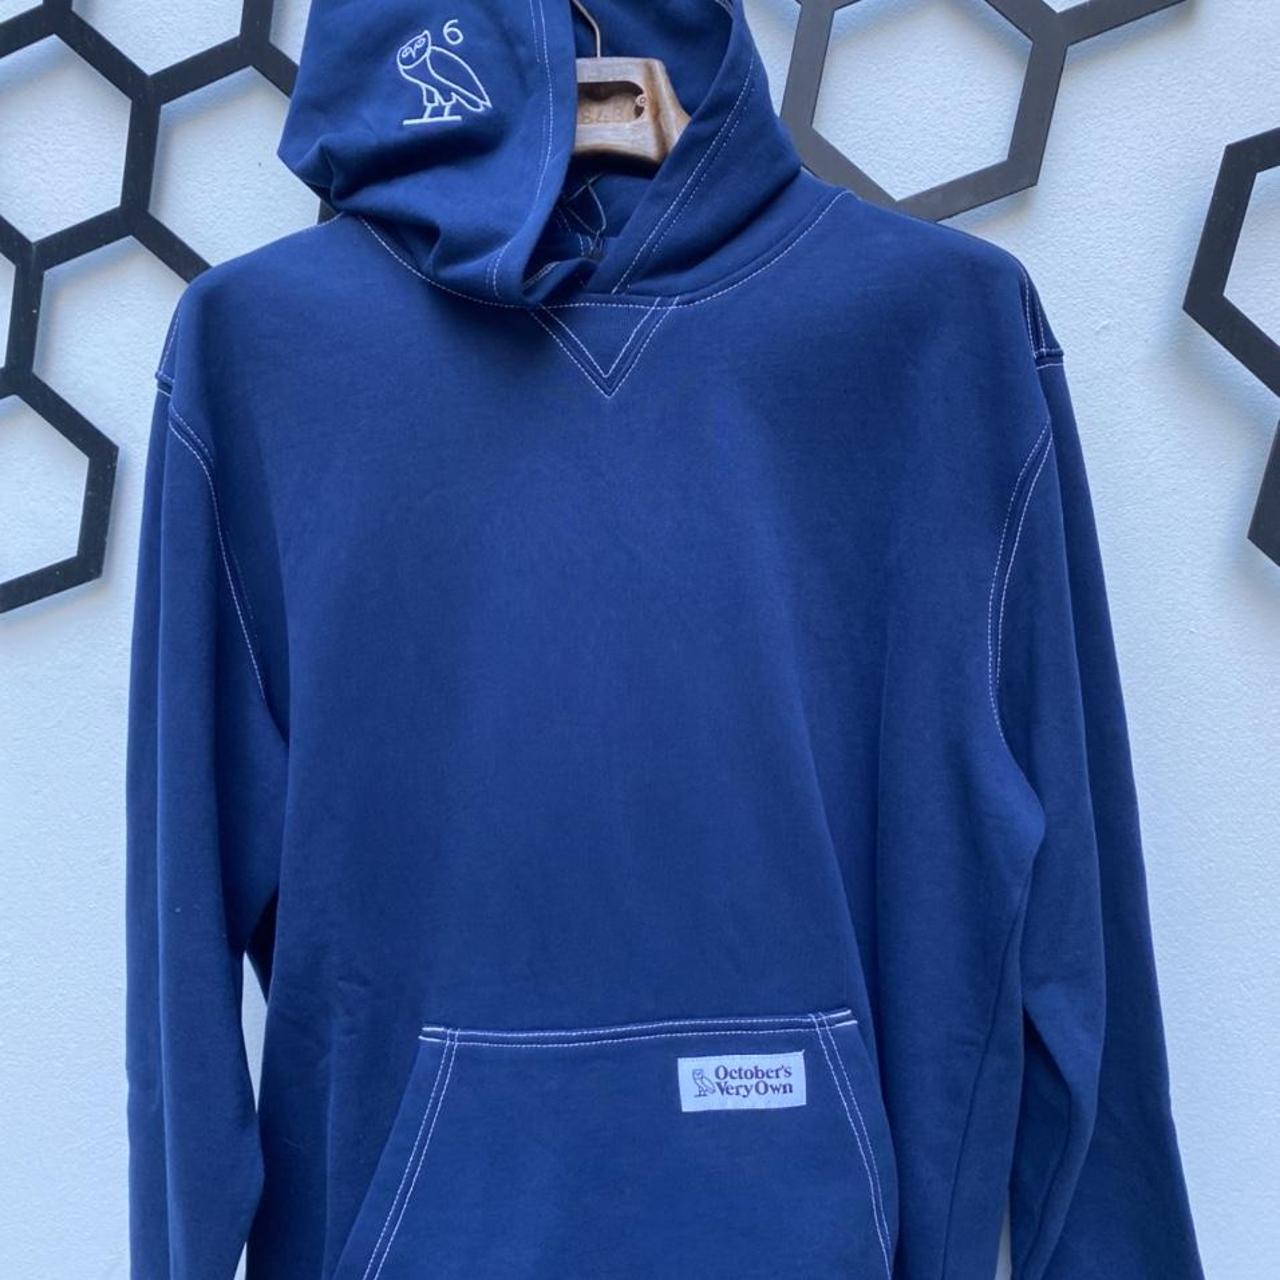 OVO contrast stitch hoodie in navy blue, size is XL,... - Depop